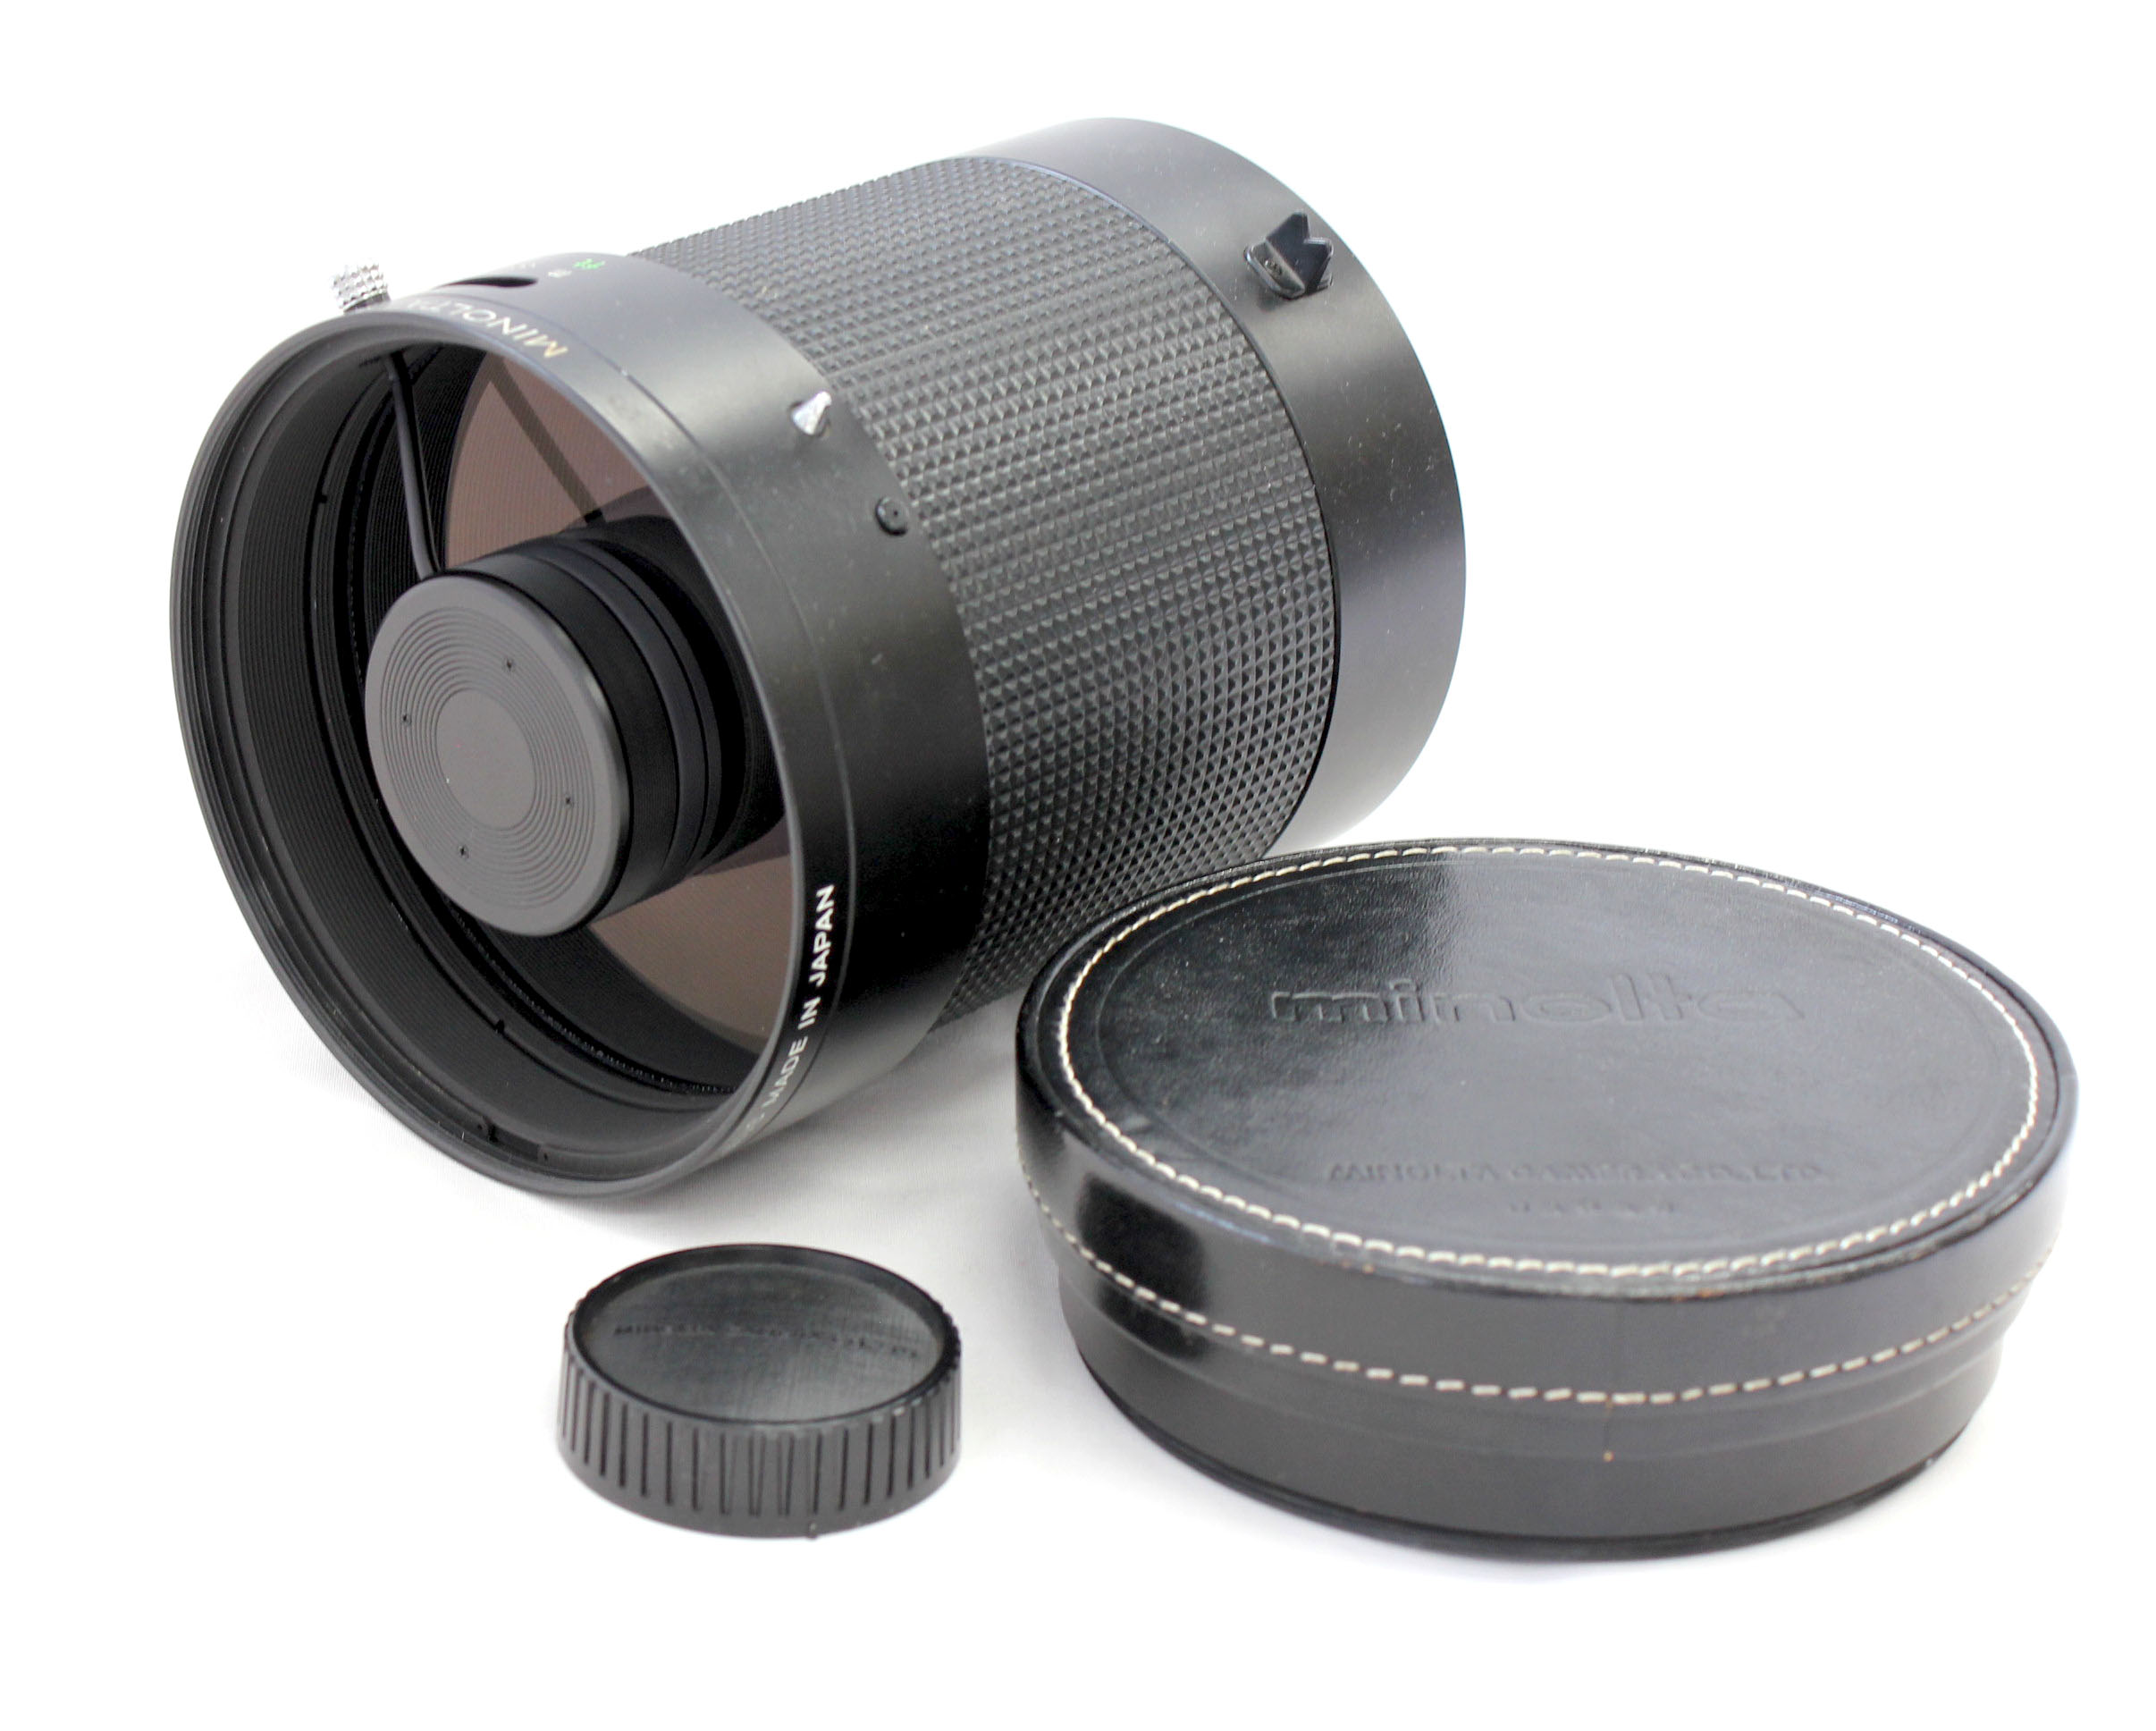 [Excellent++++] Minolta RF Rokkor 800mm F/8 MD Mount Telephoto Reflex Mirror Lens from Japan